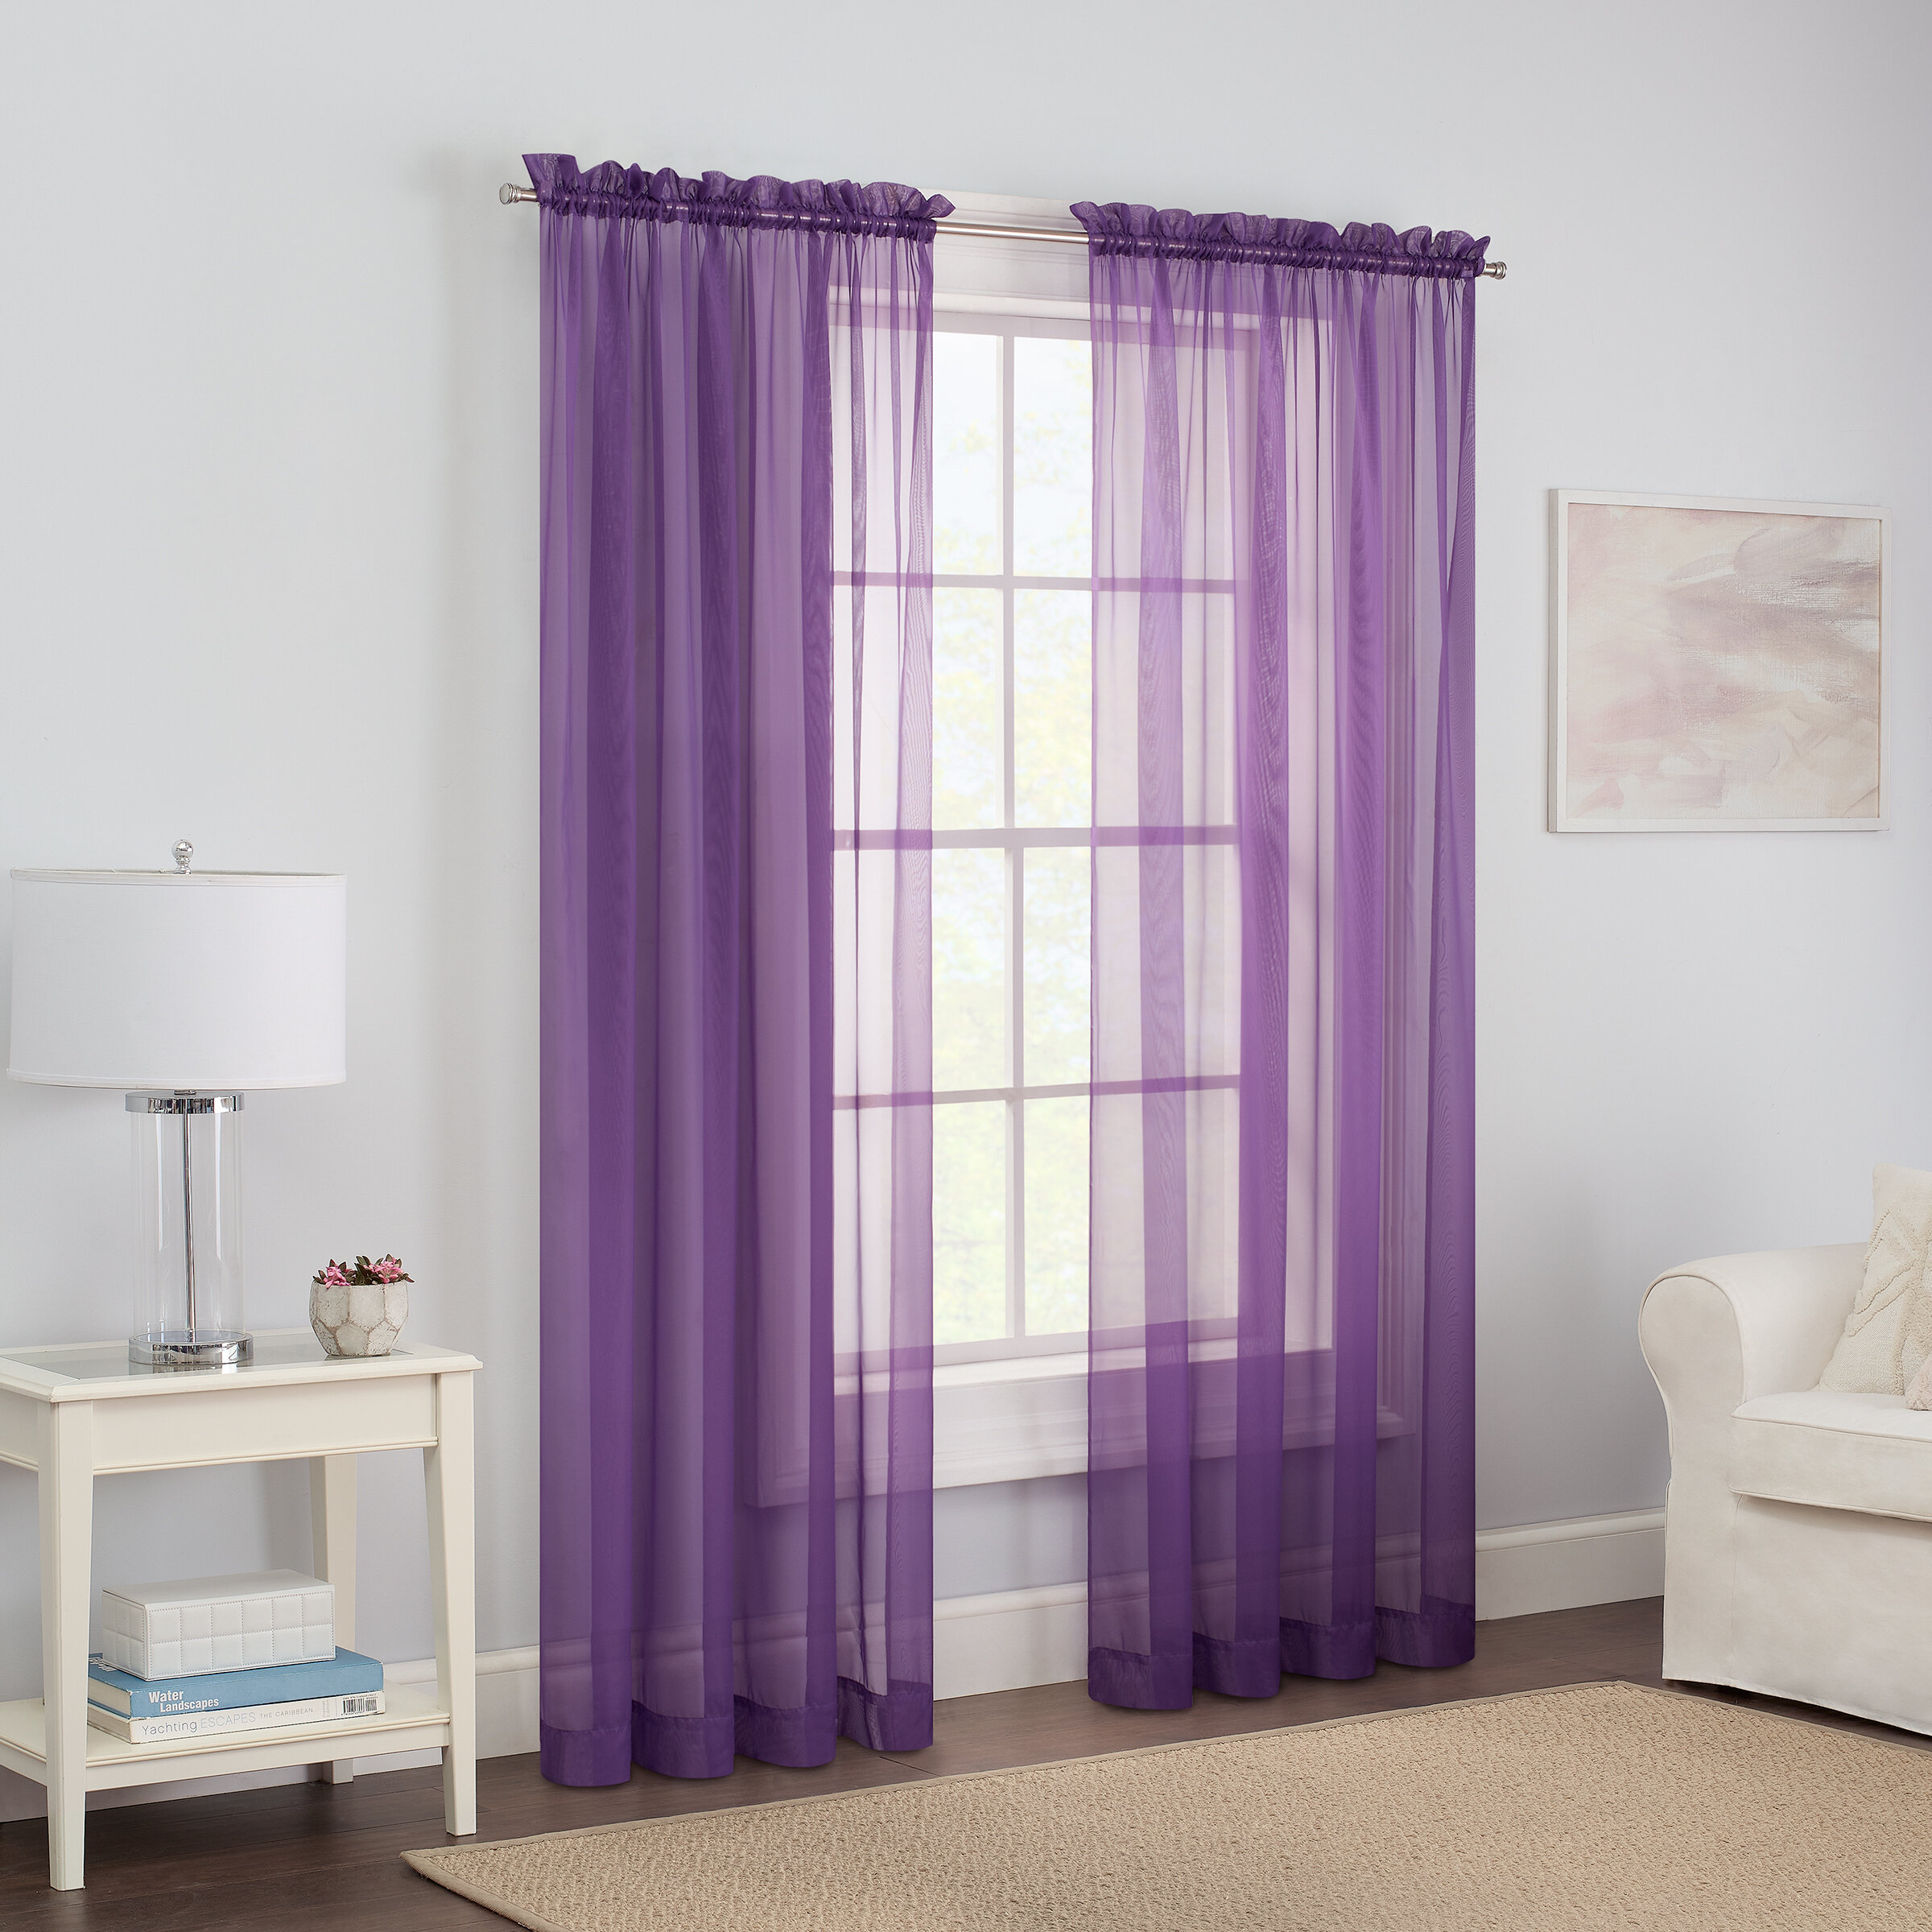 55" x 84" 2 Purple Elegant Window Panels Treatments Sheers Curtains Drapes 